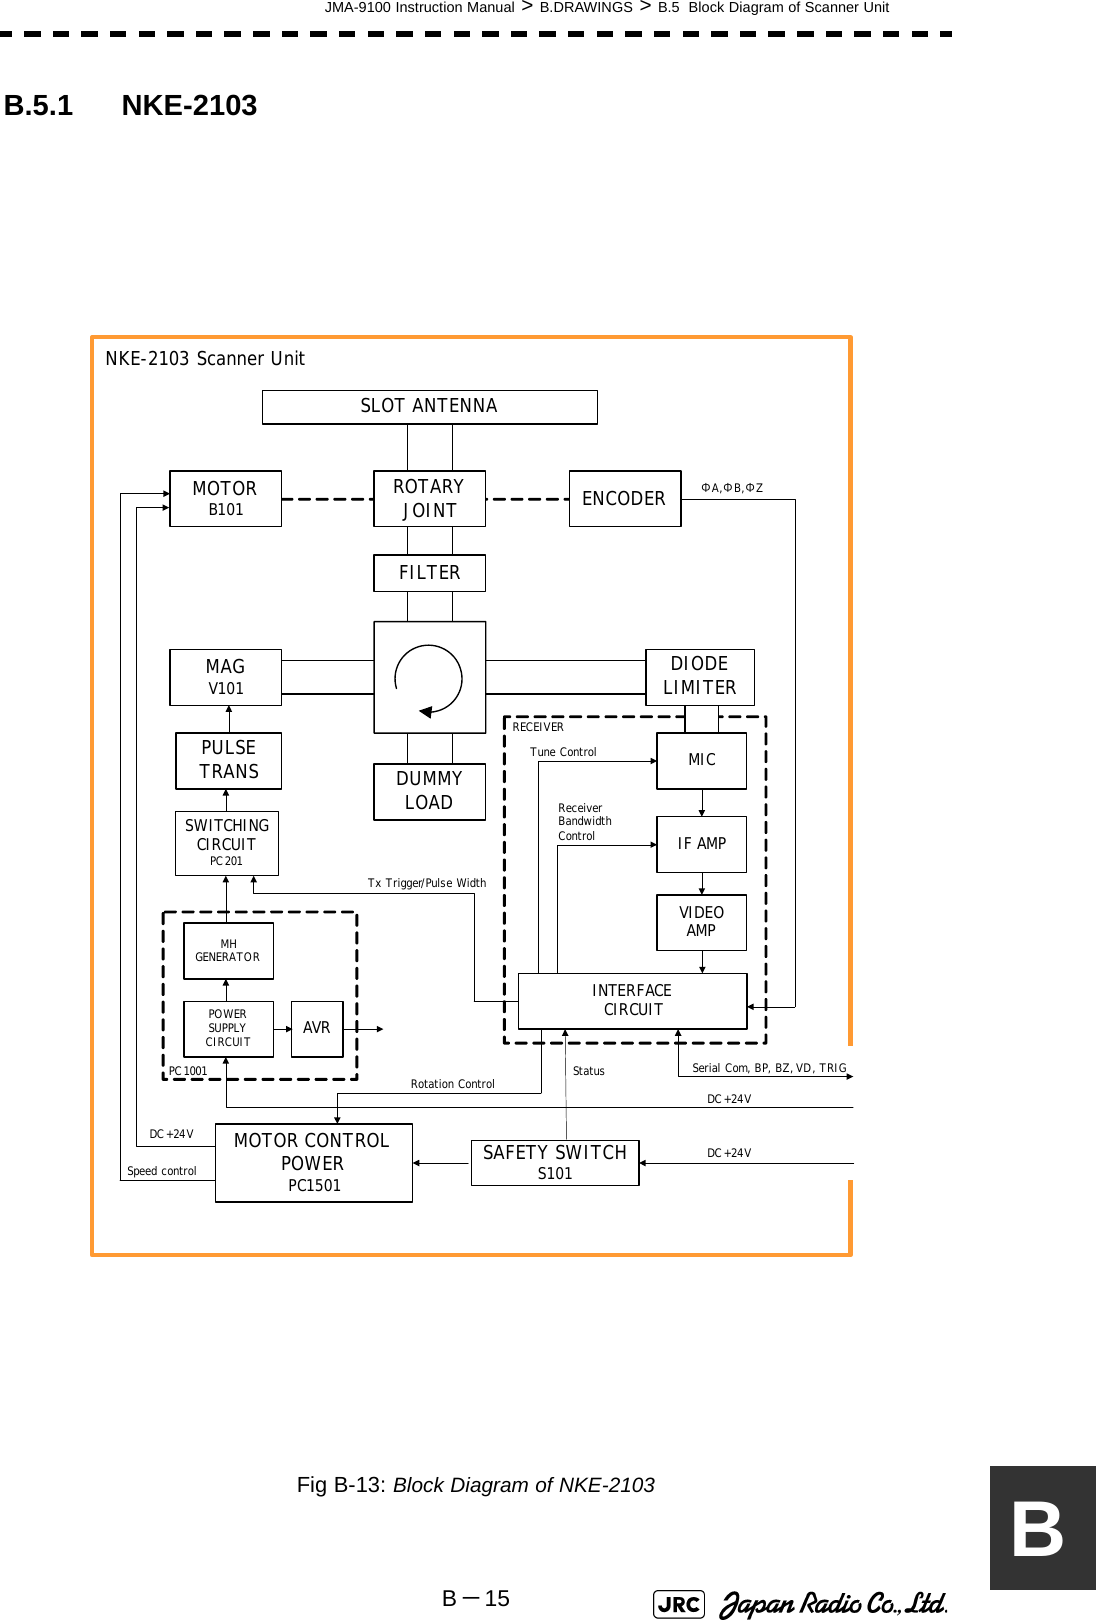 JMA-9100 Instruction Manual &gt; B.DRAWINGS &gt; B.5  Block Diagram of Scanner UnitB－15BB.5.1 NKE-2103Fig B-13: Block Diagram of NKE-2103SLOT ANTENNAMOTORB101SAFETY SWITCHS101MAGV101PULSETRANSSWITCHINGCIRCUITPC201MHGENERATORAVRINTERFACE CIRCUITPC1001MICIF AMPVIDEO AMPRECEIVERReceiver BandwidthControlTune ControlΦA,ΦB,ΦZFILTERDUMMYLOADDC+24VSerial Com, BP, BZ, VD, TRIGNKE-2103 Scanner UnitPOWER SUPPLYCIRCUITMOTOR CONTROLPOWERPC1501Rotation ControlSpeed controlStatusDC+24VTx Trigger/Pulse WidthDC+24VDIODELIMITERENCODERROTARYJOINT